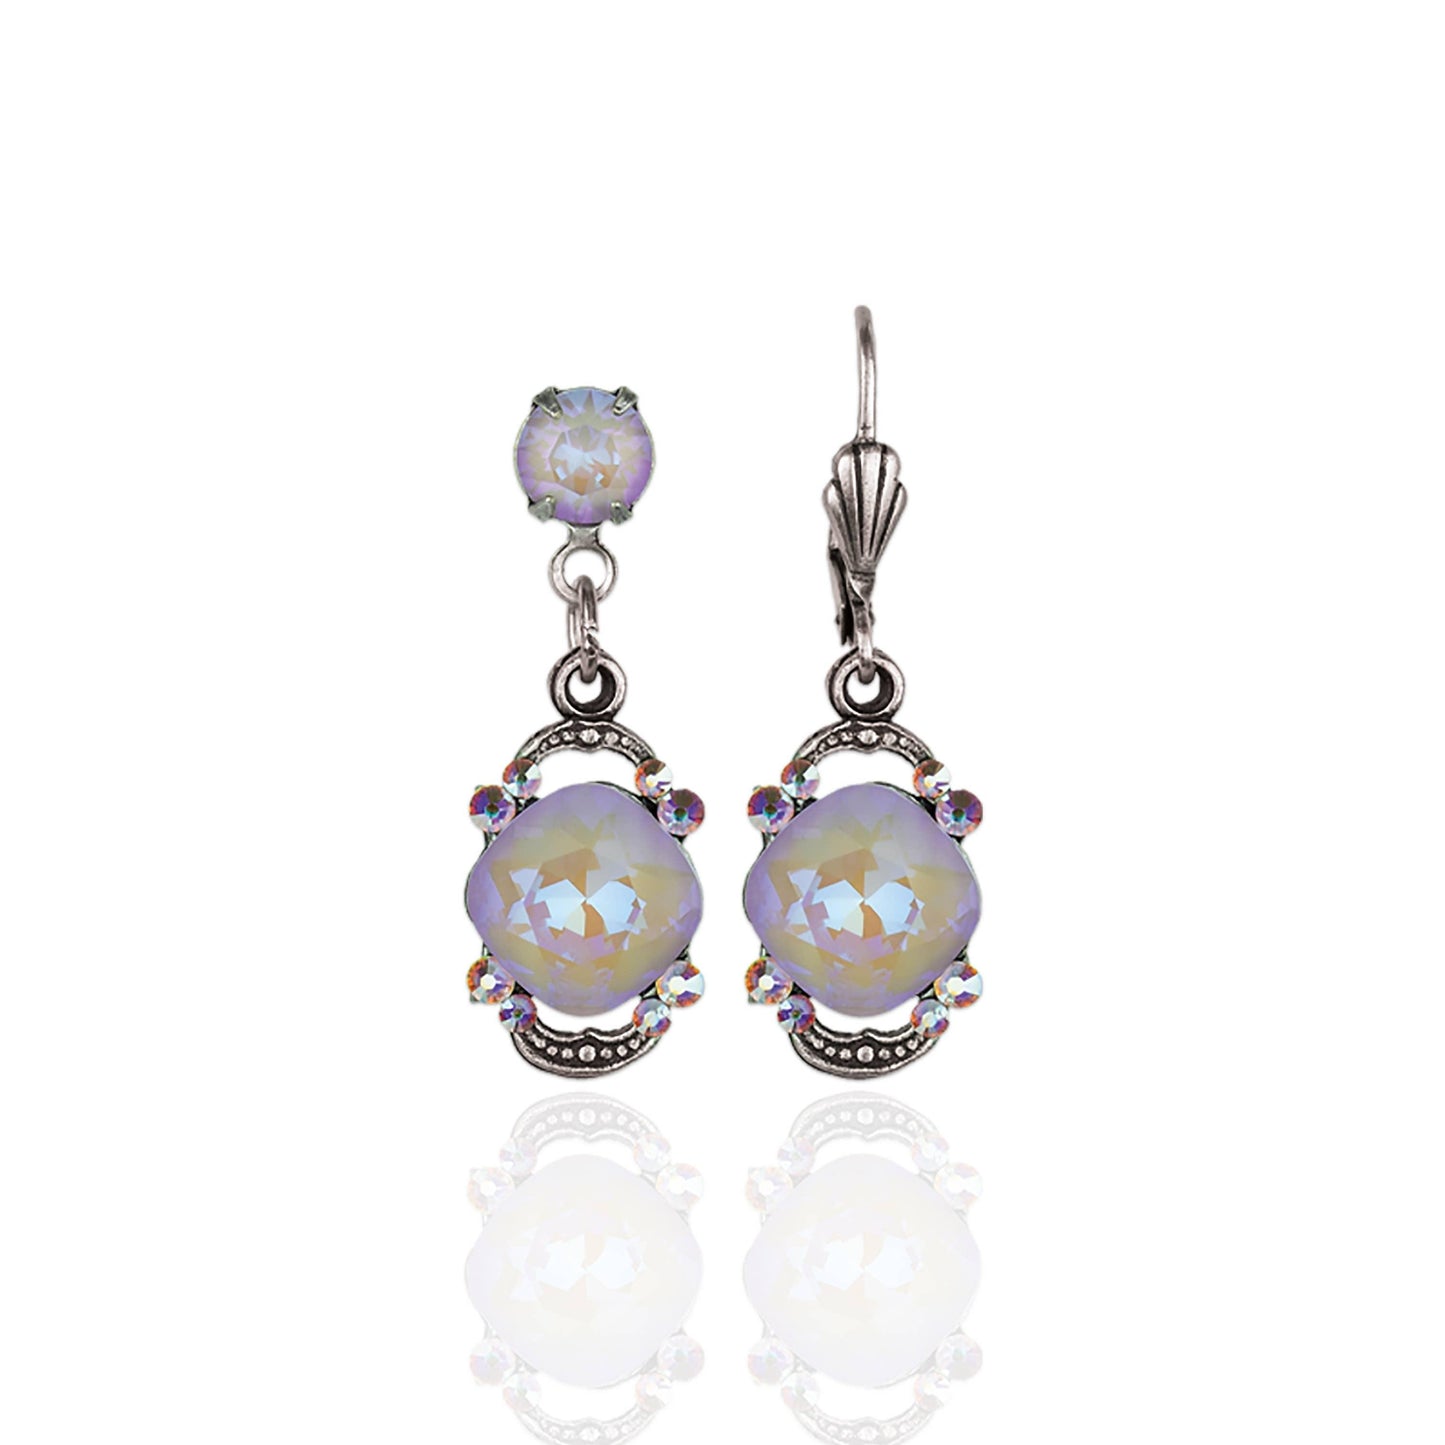 Eva Crystal Earrings: Lavender DeLite / Leverback - Sugar River Shoppe